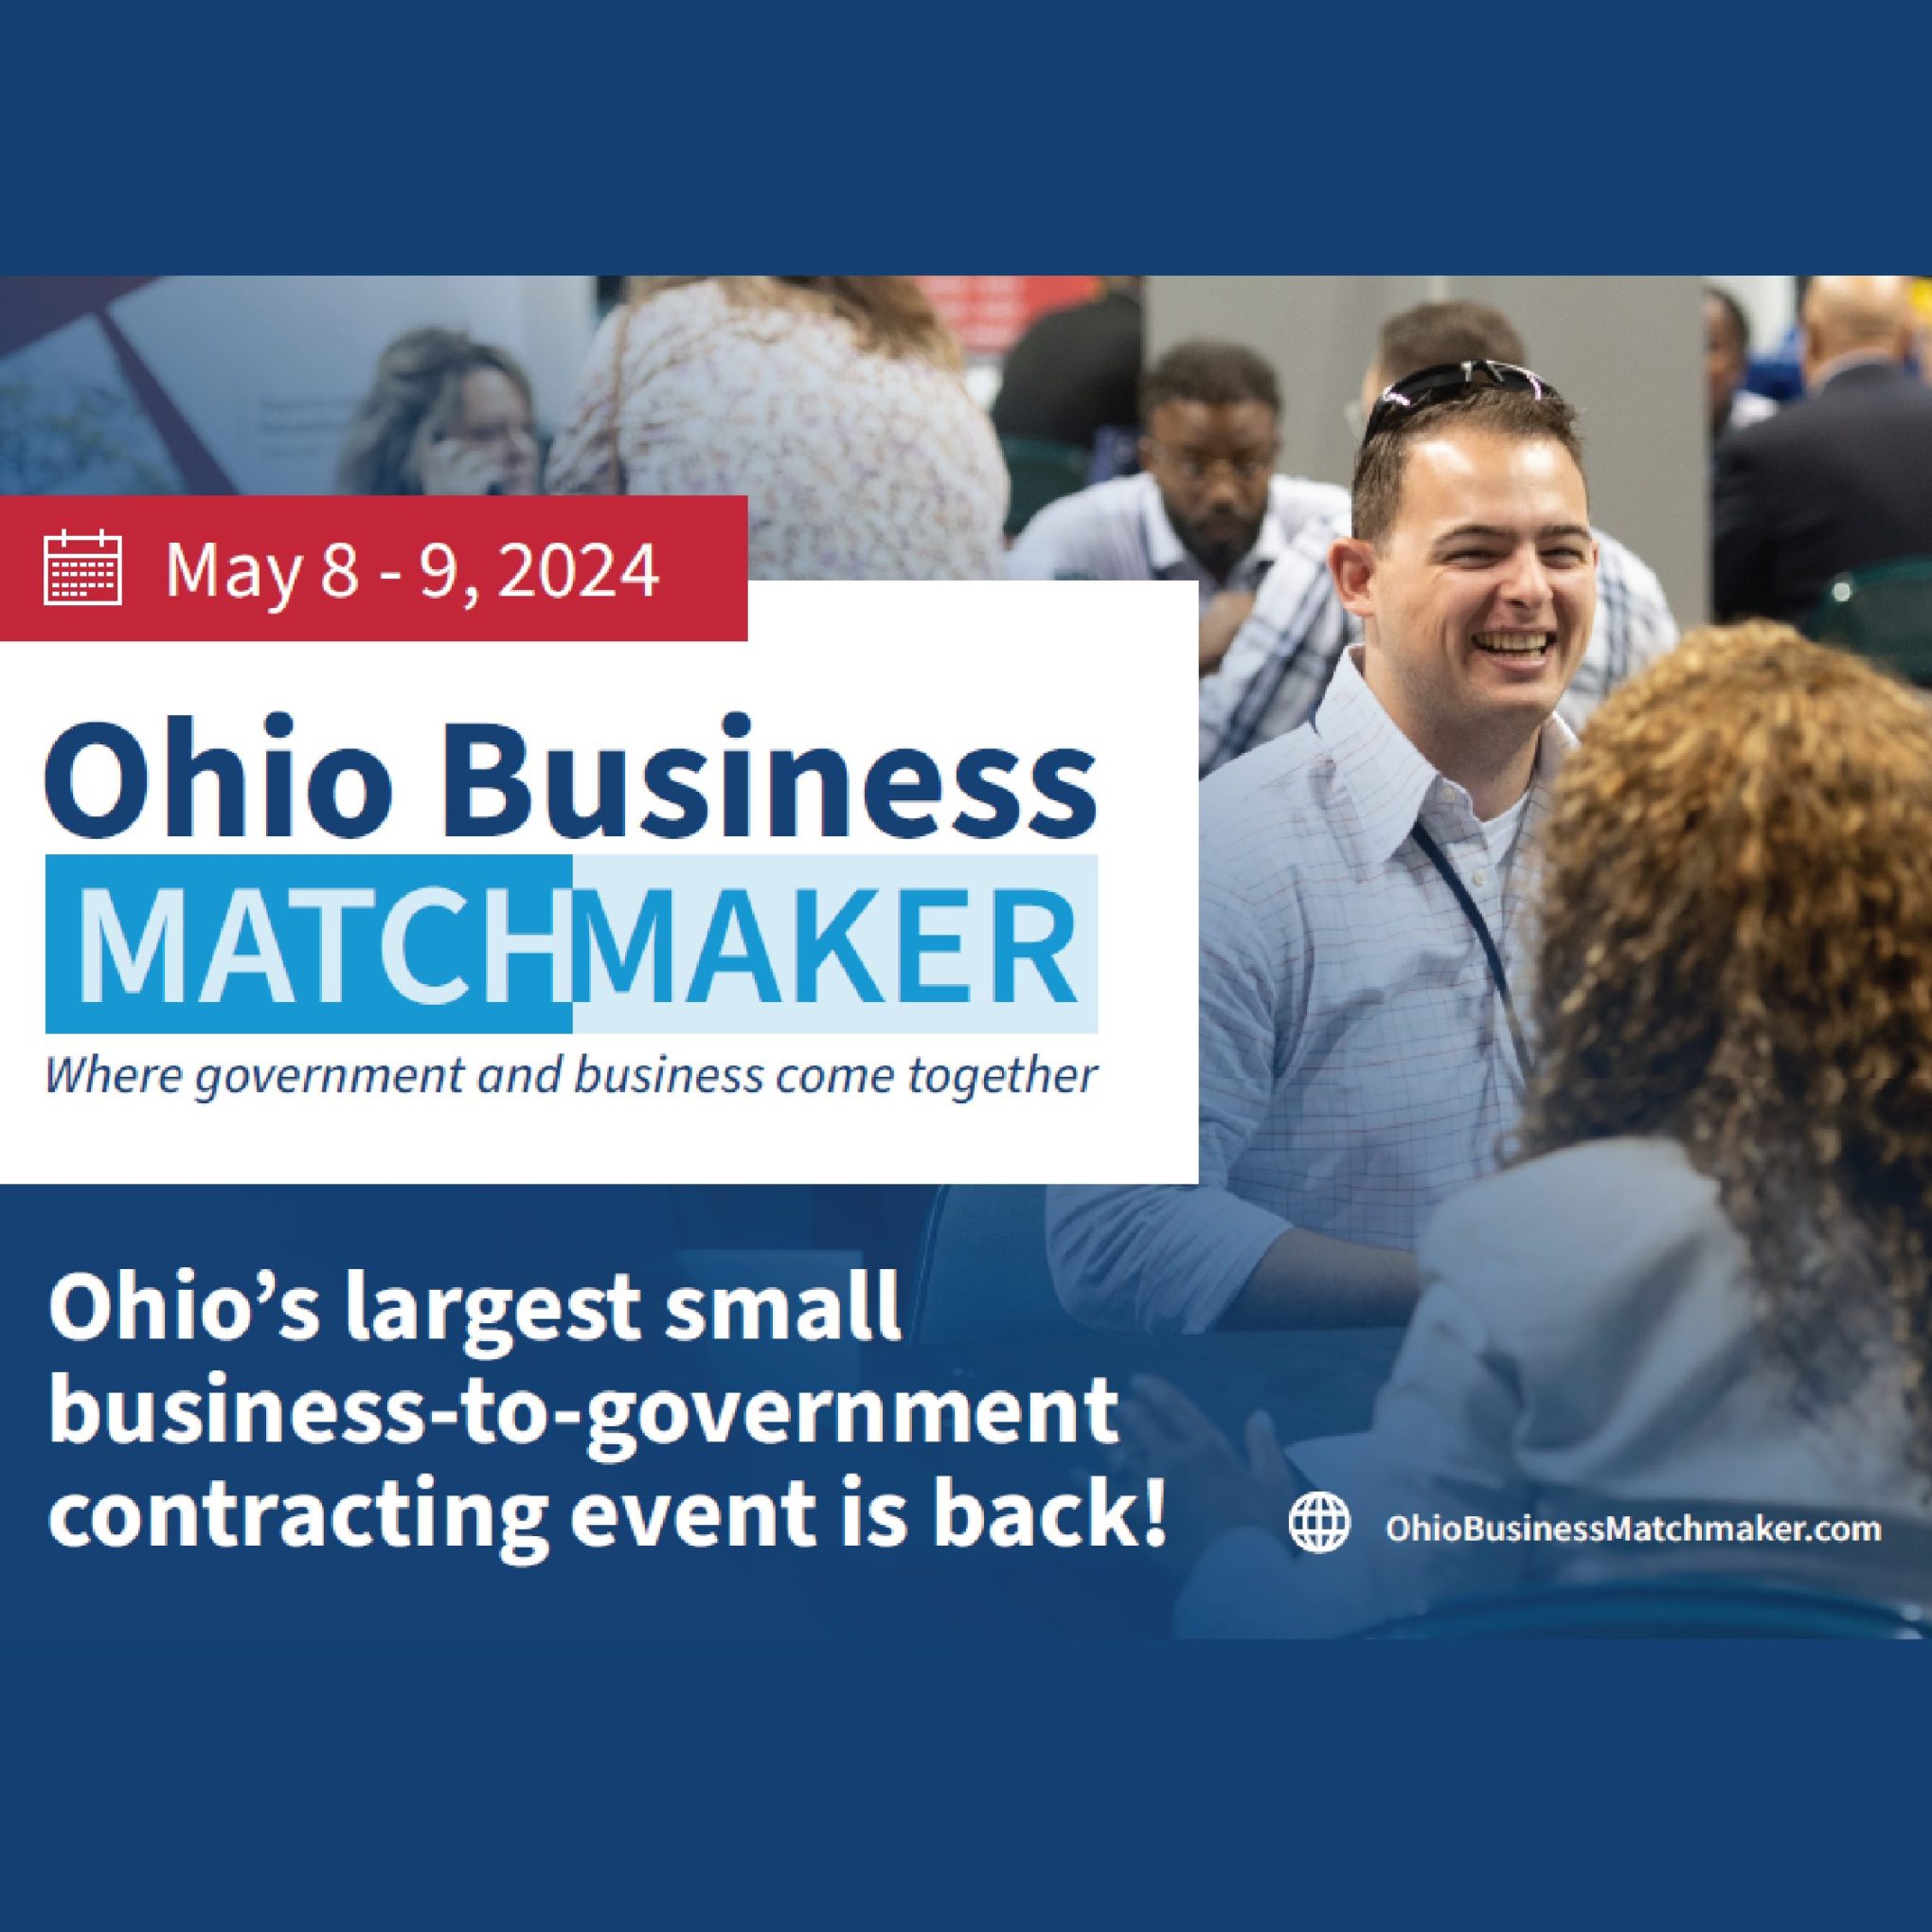 Ohio Business Matchmaker